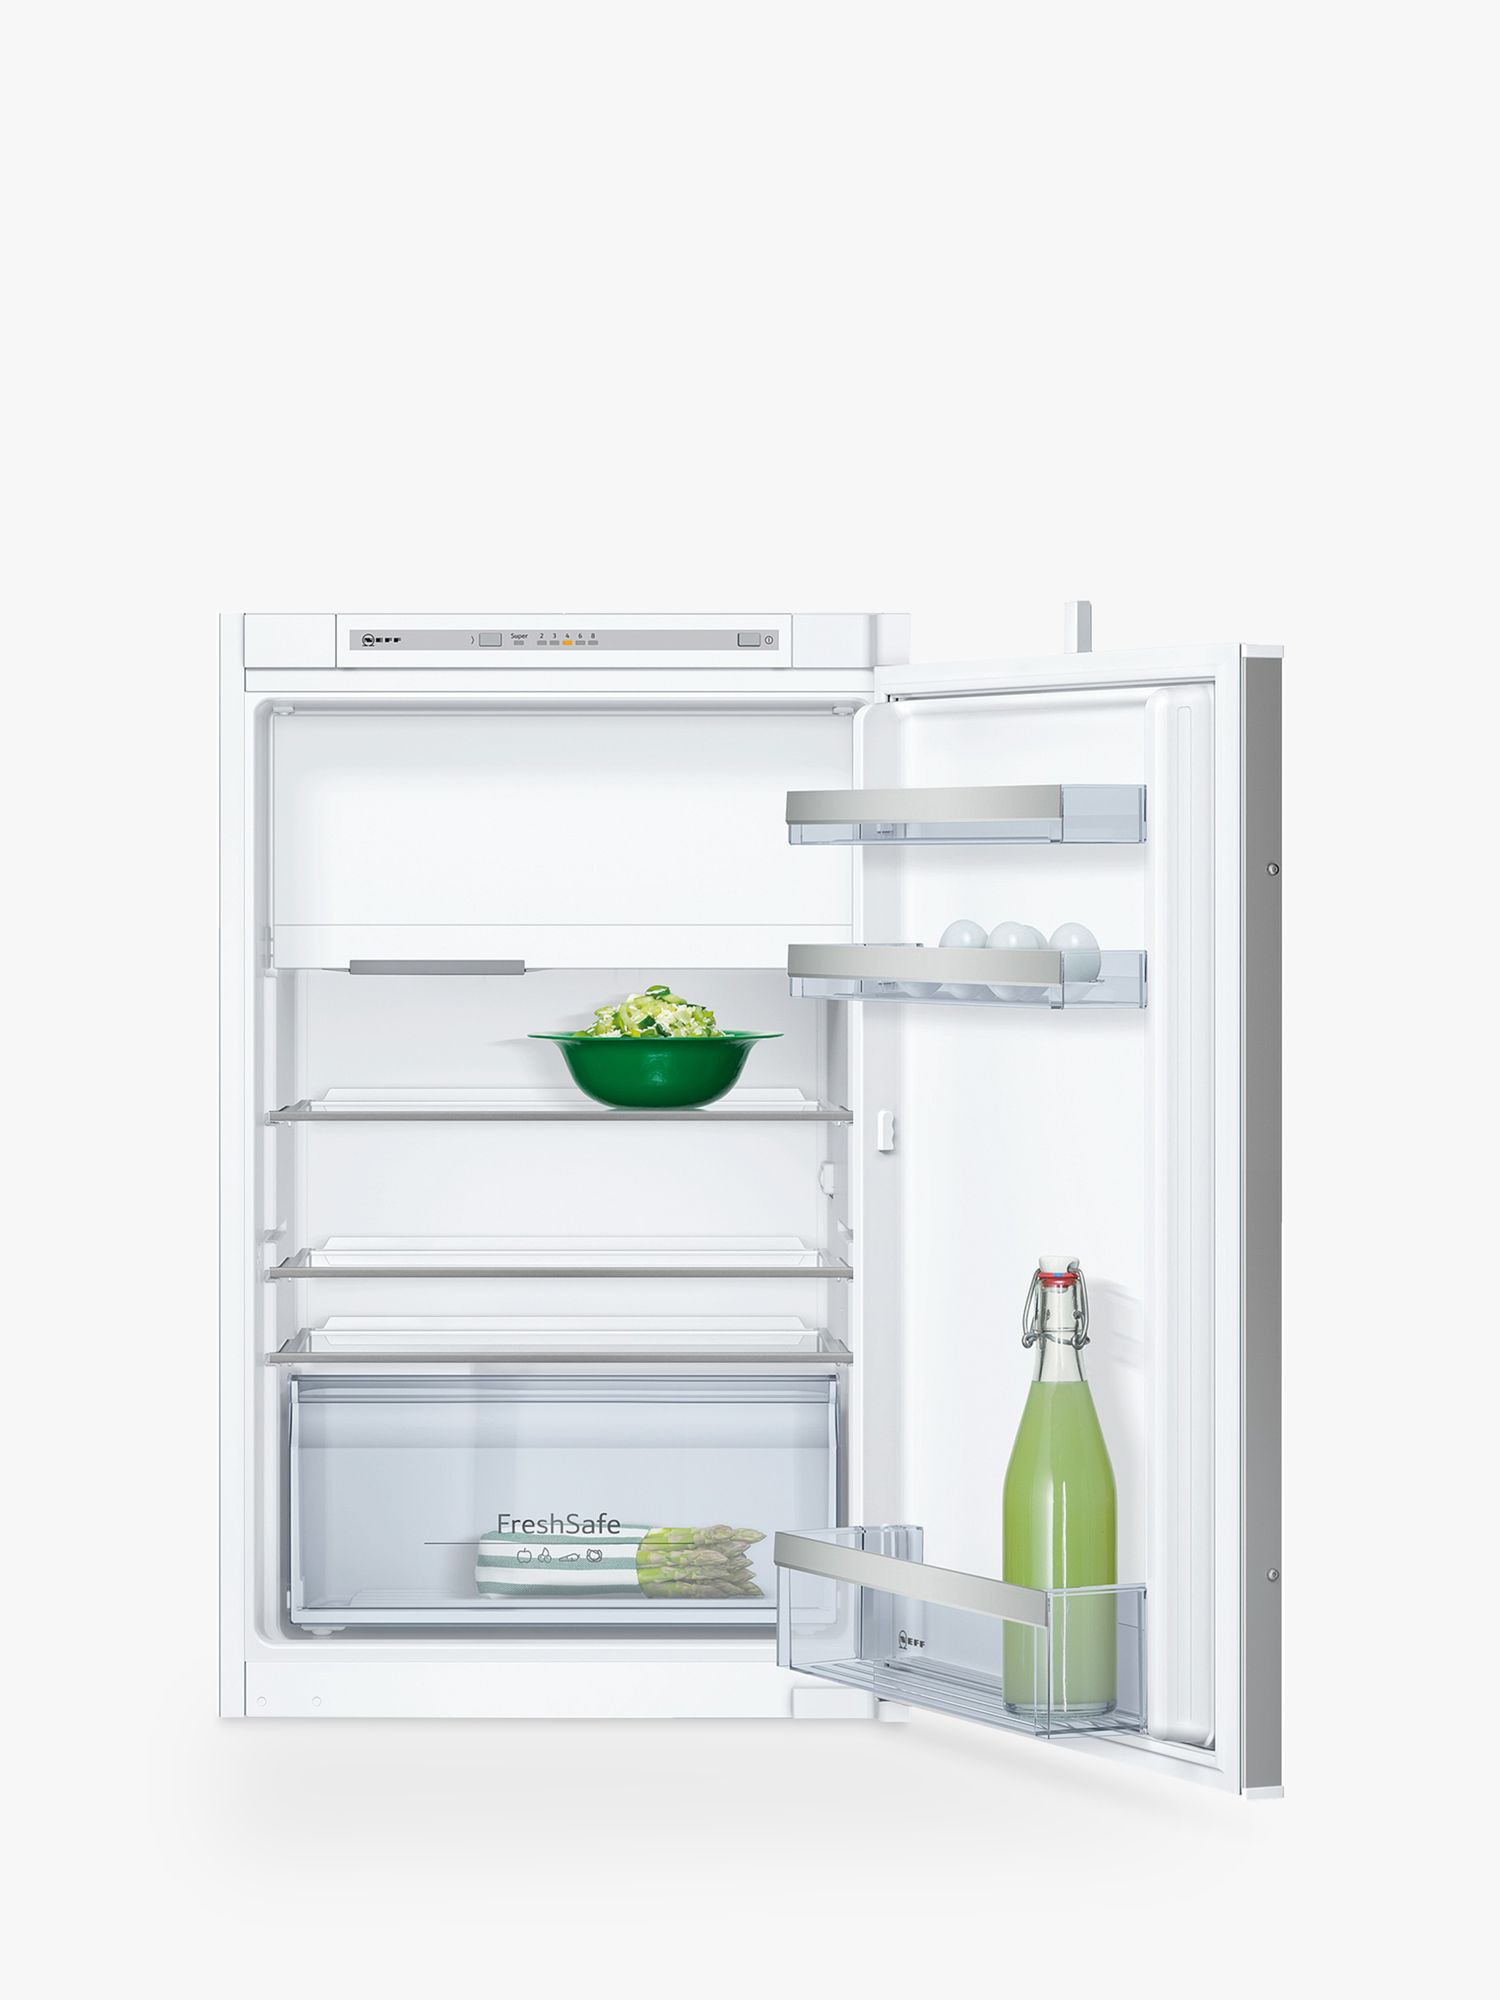 Neff KI2222S30G Larder Fridge with Freezer Compartment, A++ Energy Rating, 54cm Wide, White